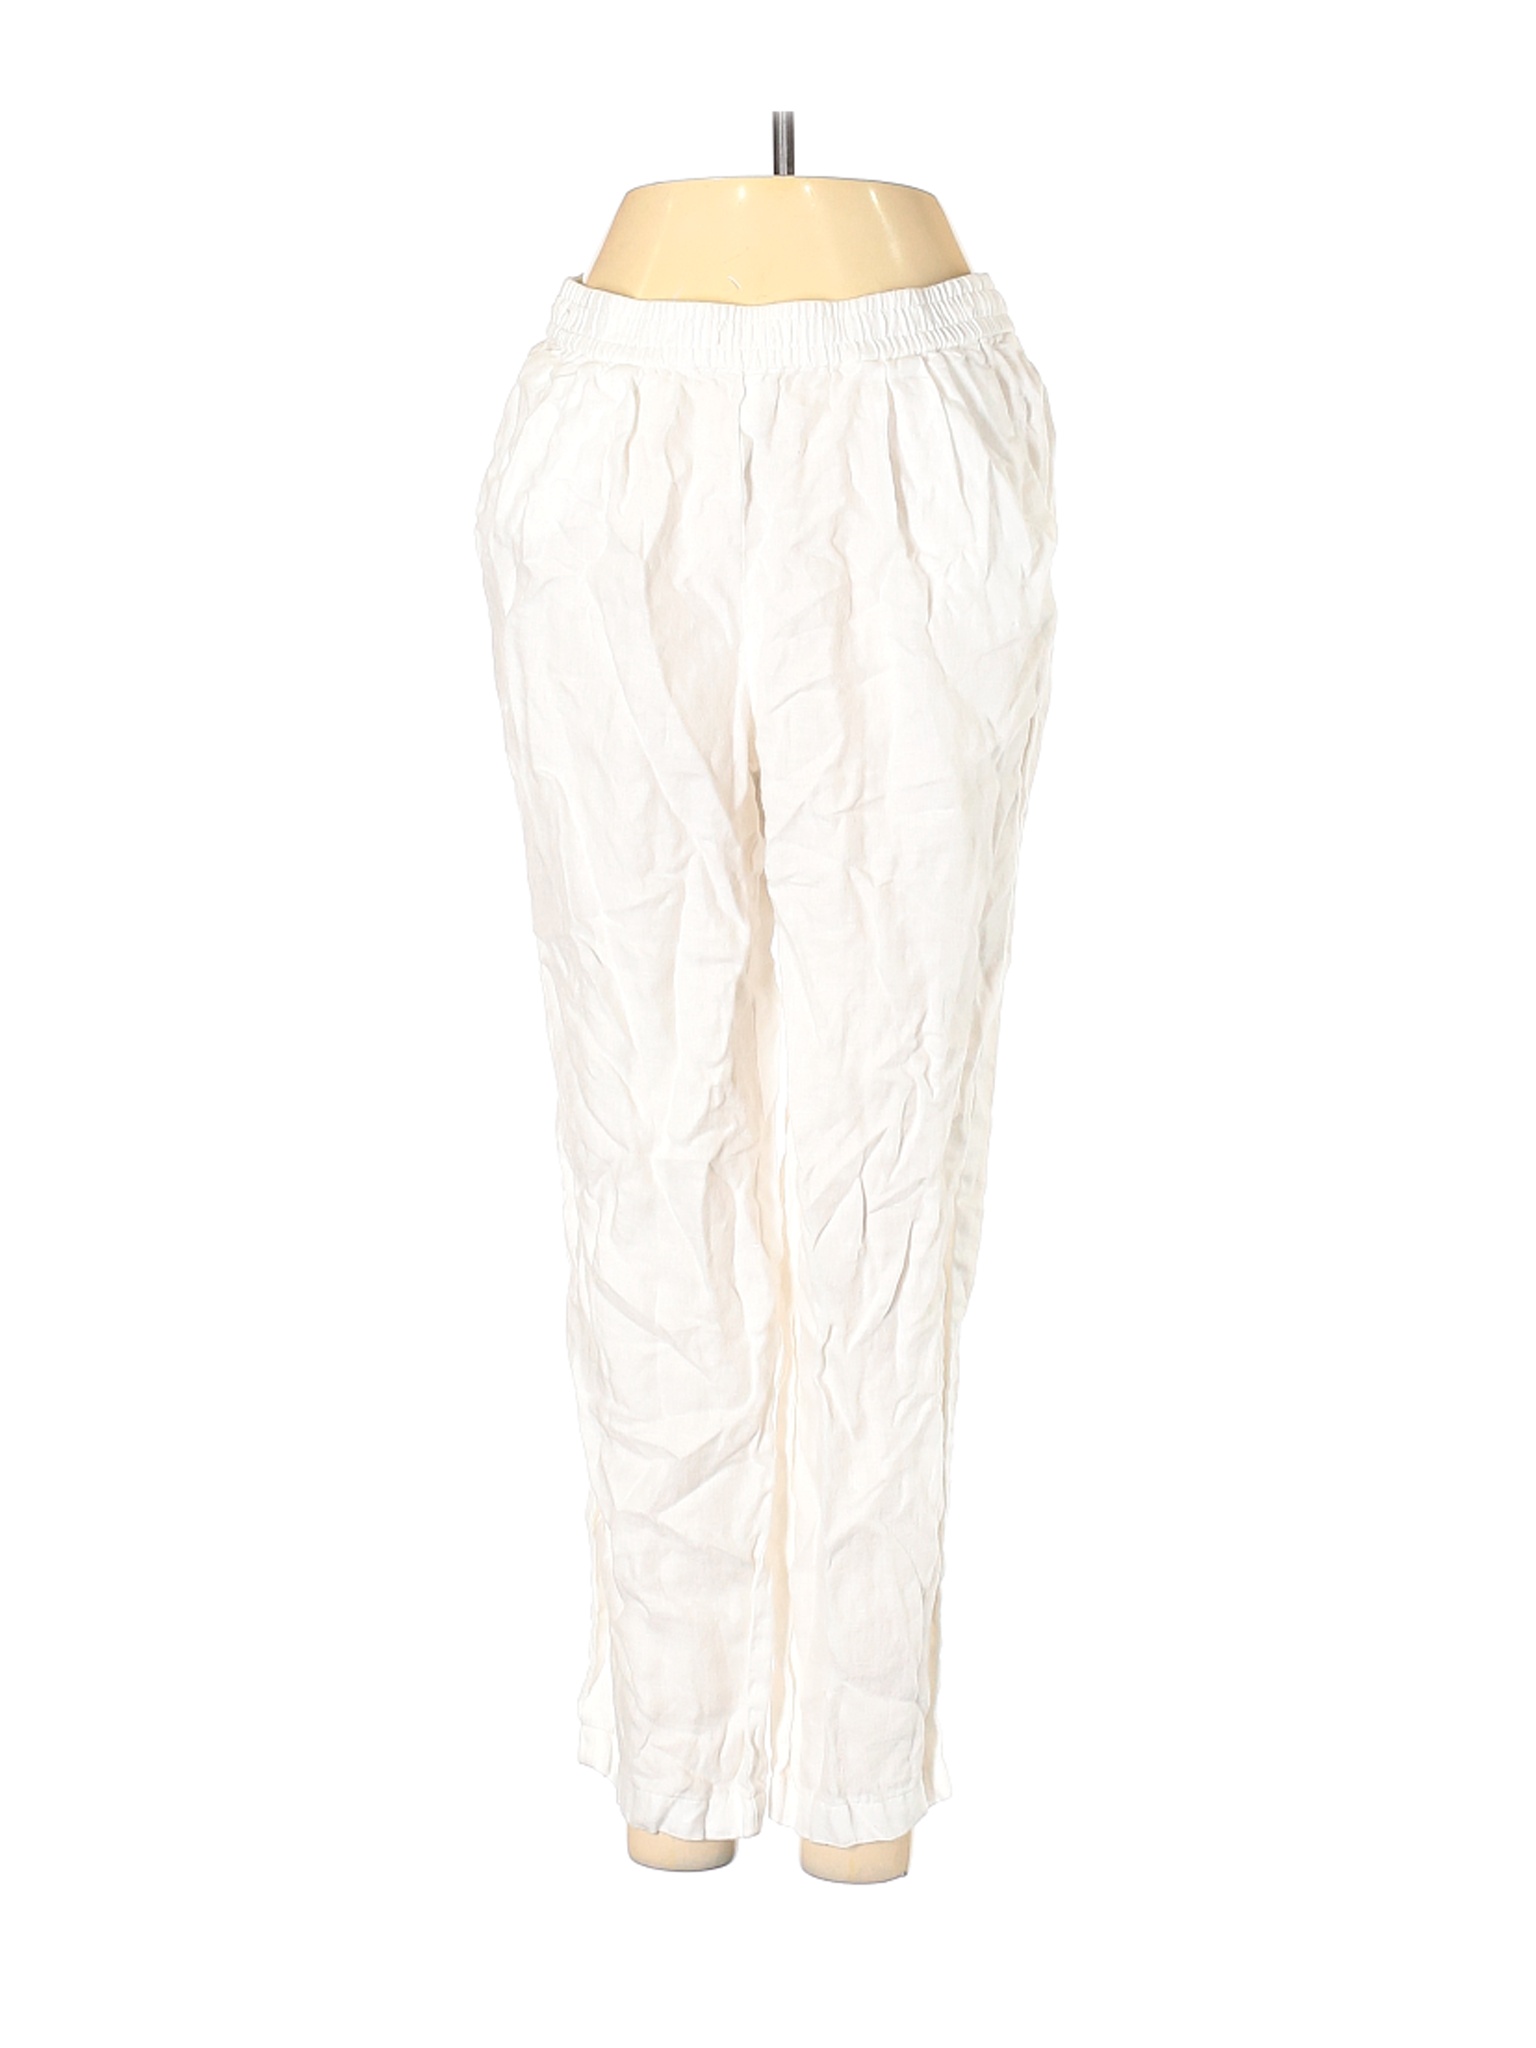 J.Crew Women White Linen Pants 4 | eBay